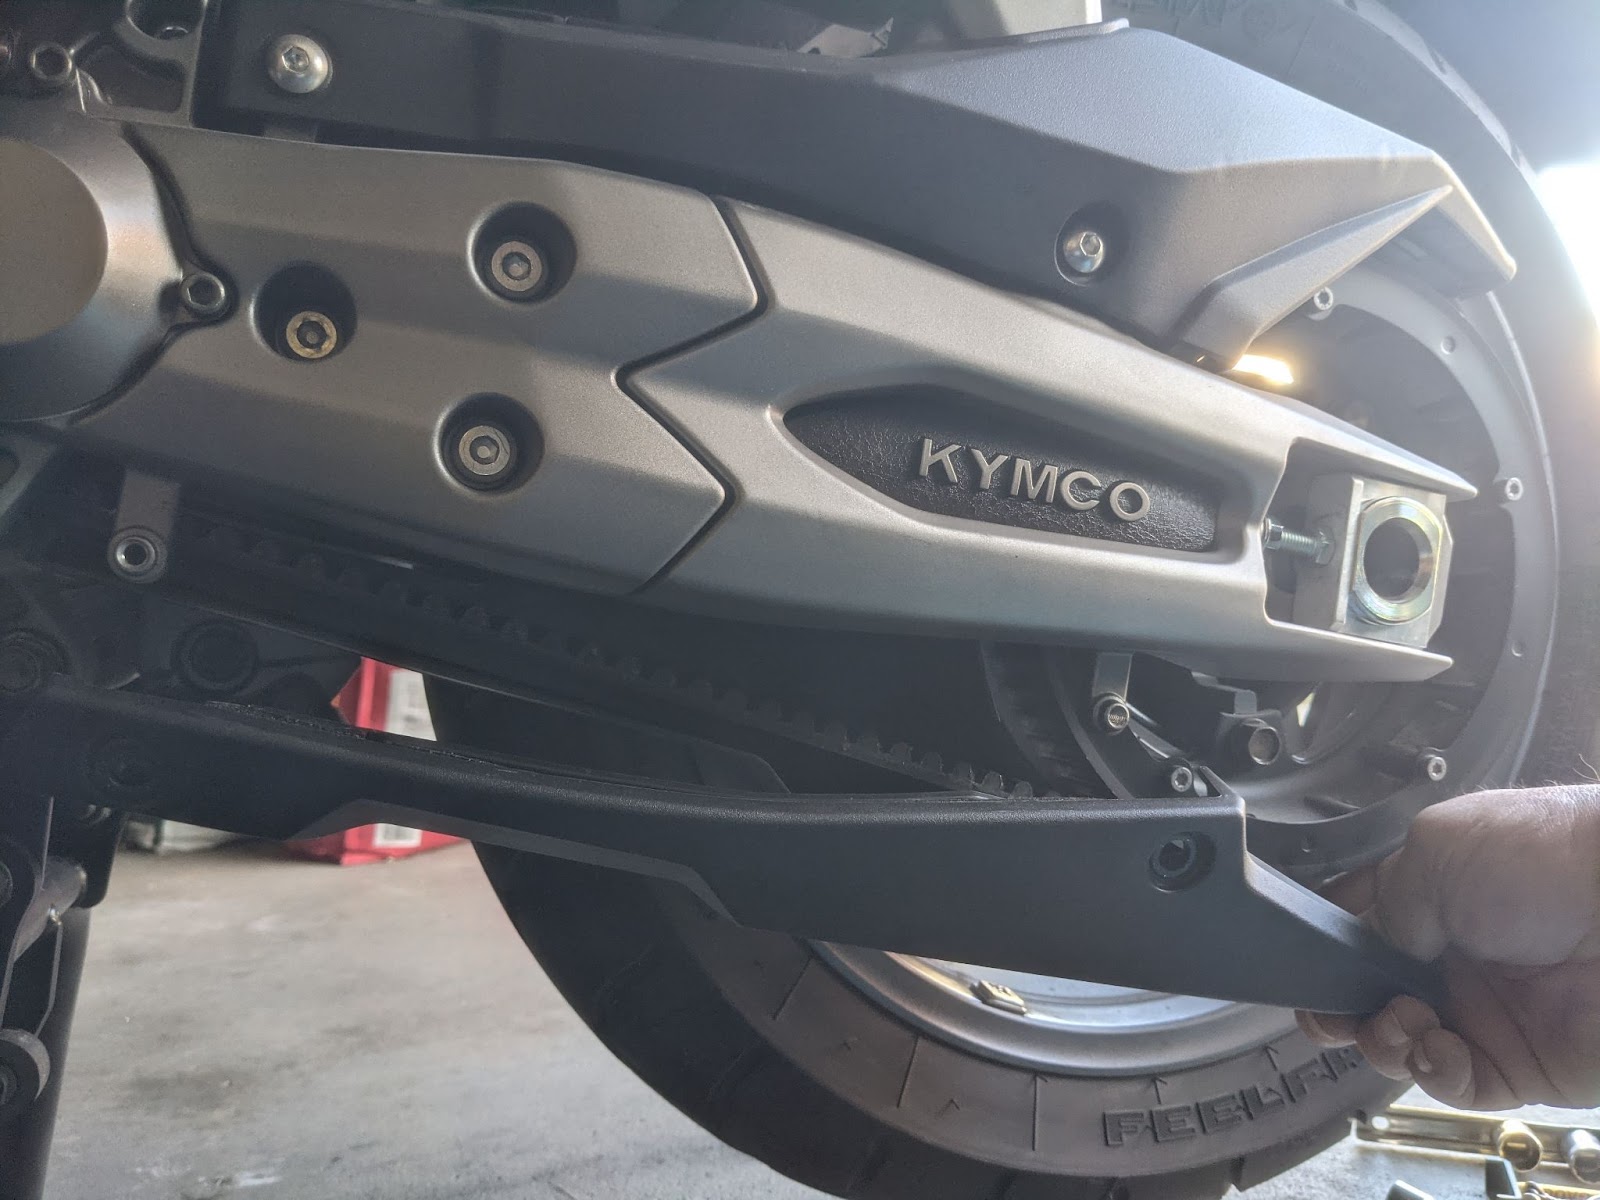 Kymco AK 550 belt tension check | Adventure Rider